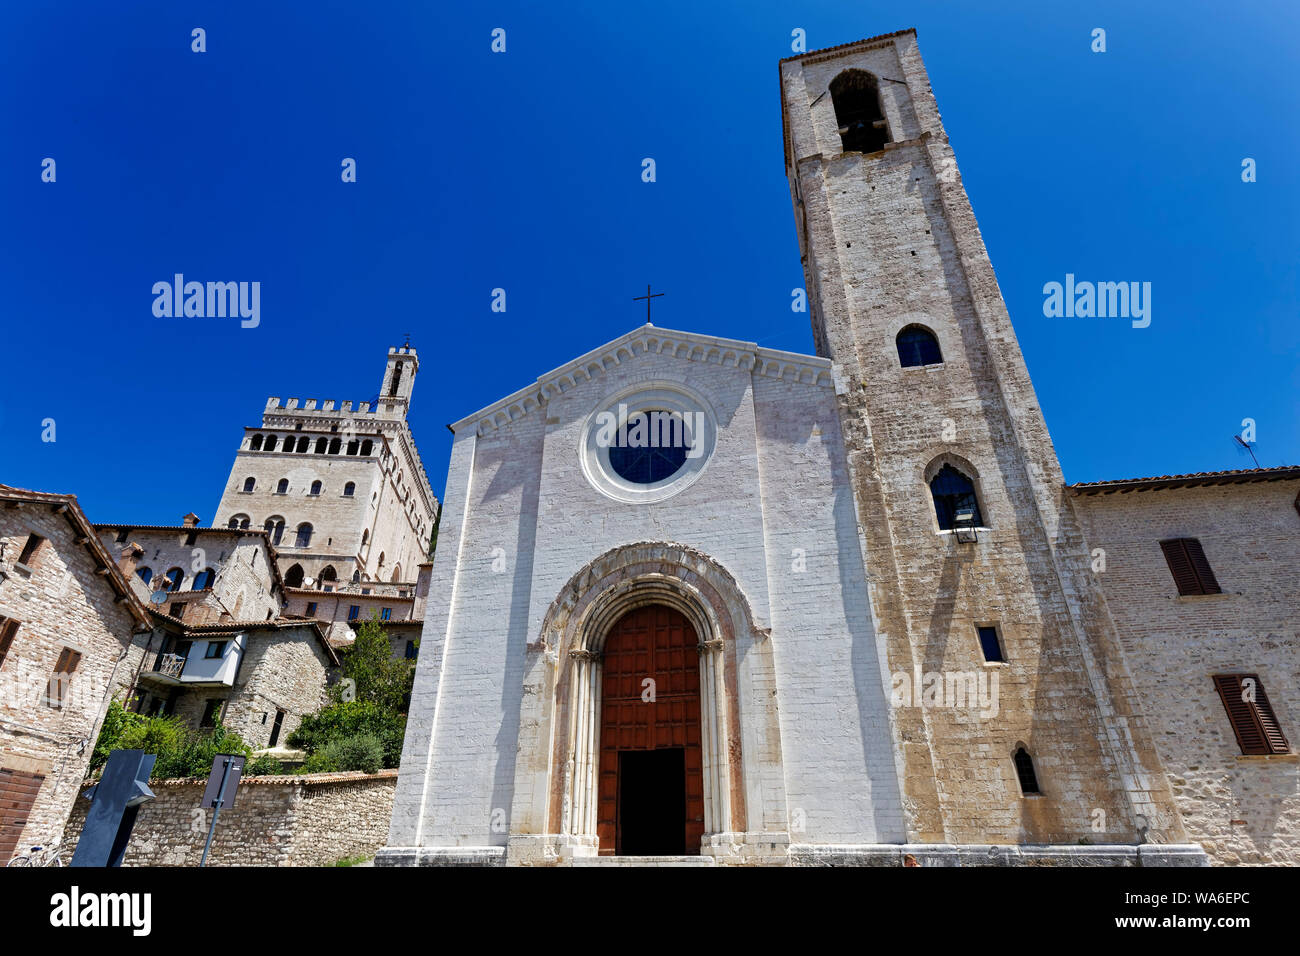 Chiesa di San Giovanni Battista, Gubbio, Ombrie, Italie Banque D'Images